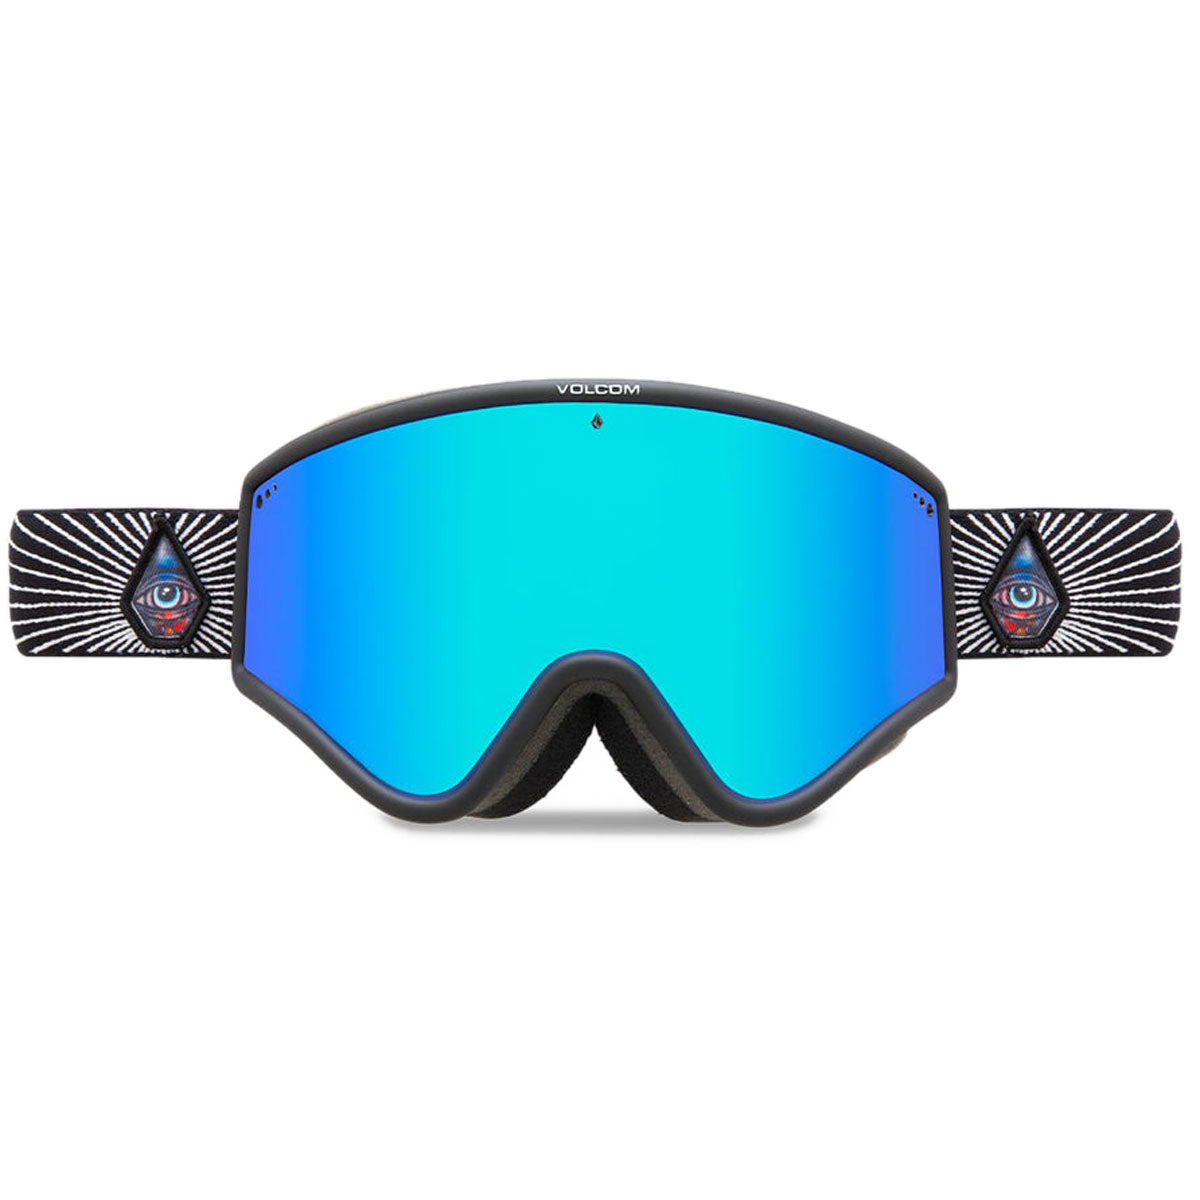 Volcom Yae Jamie Lynn Snowboard Goggles - Blue Chrome image 1